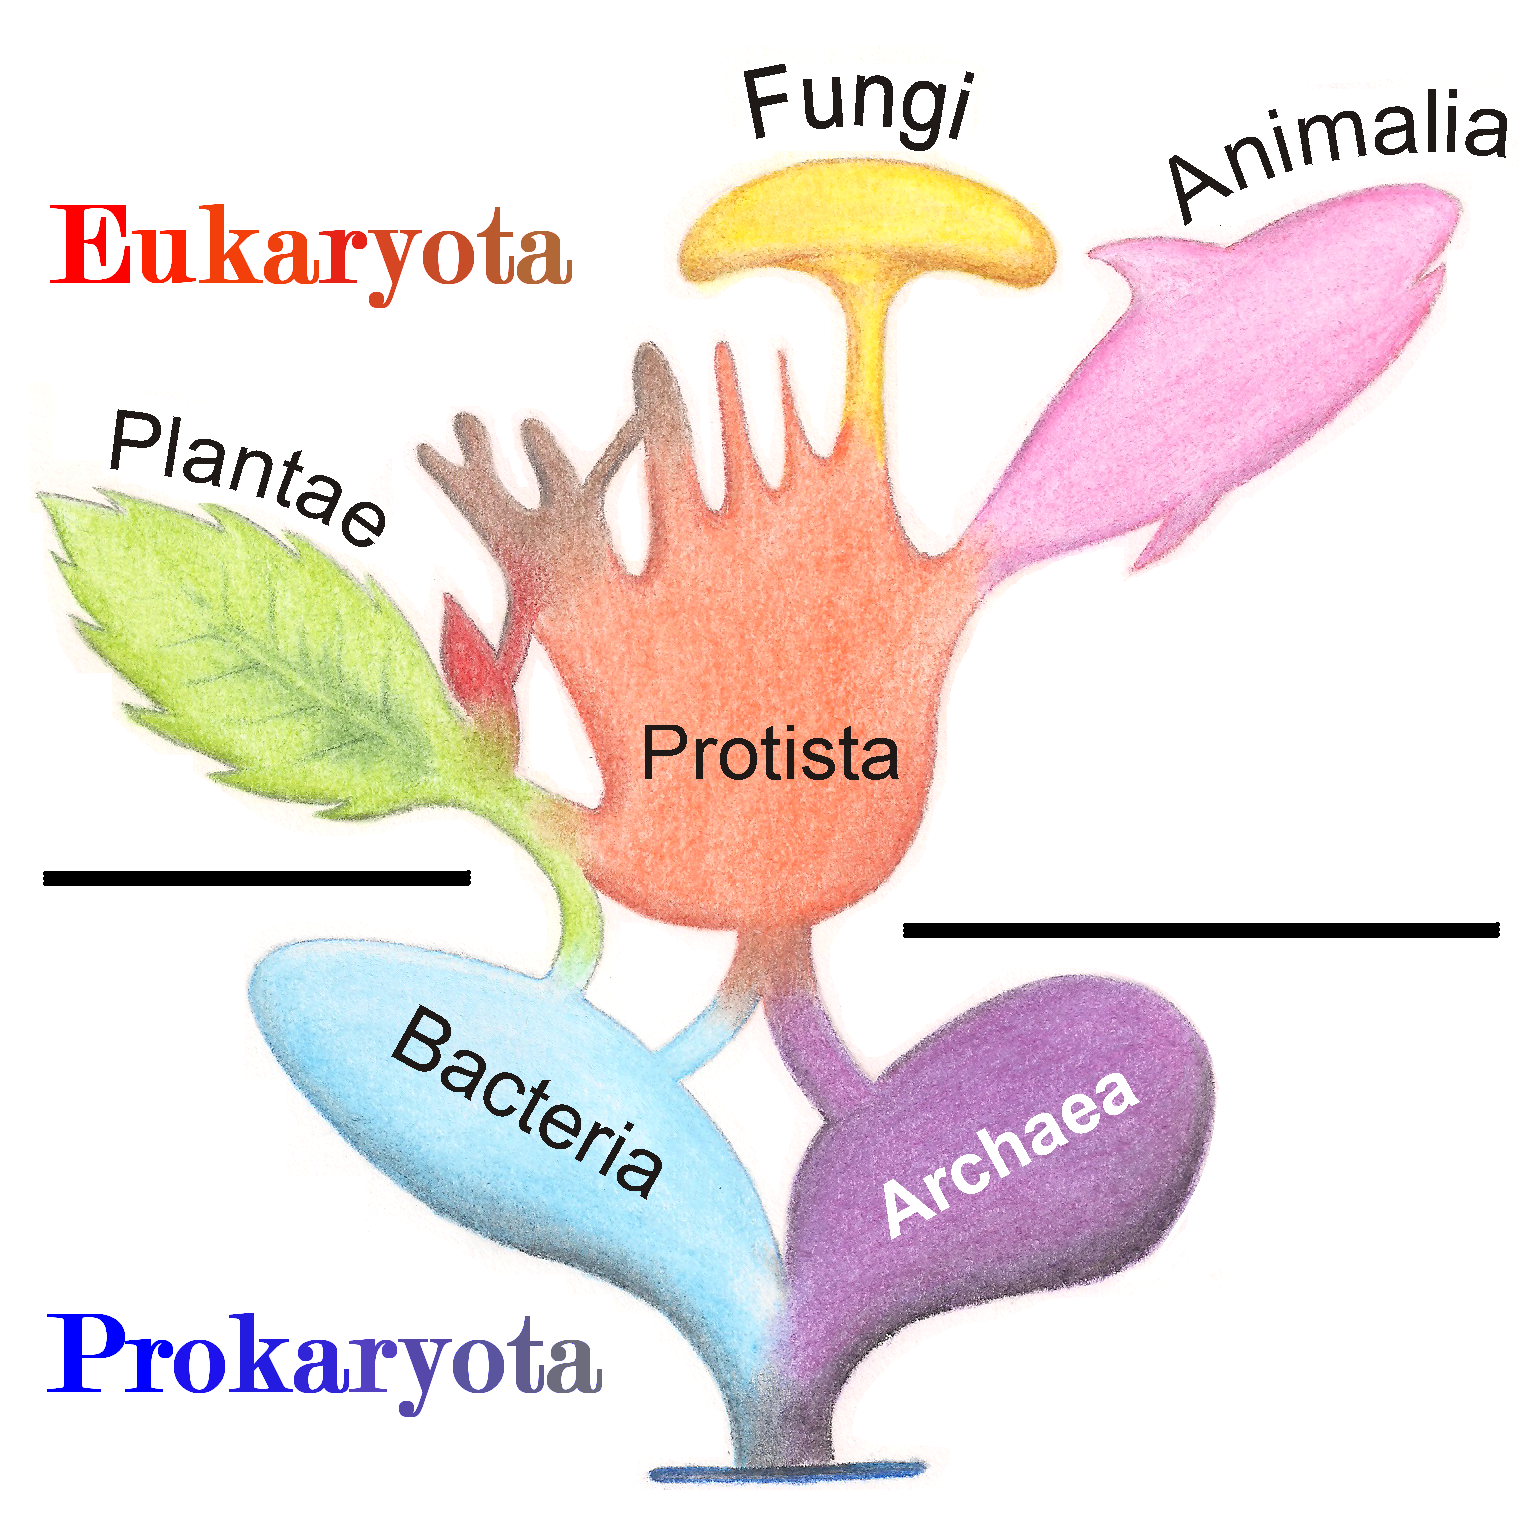 Tree of living organisms showing the origins of eukaryotes and prokaryotes